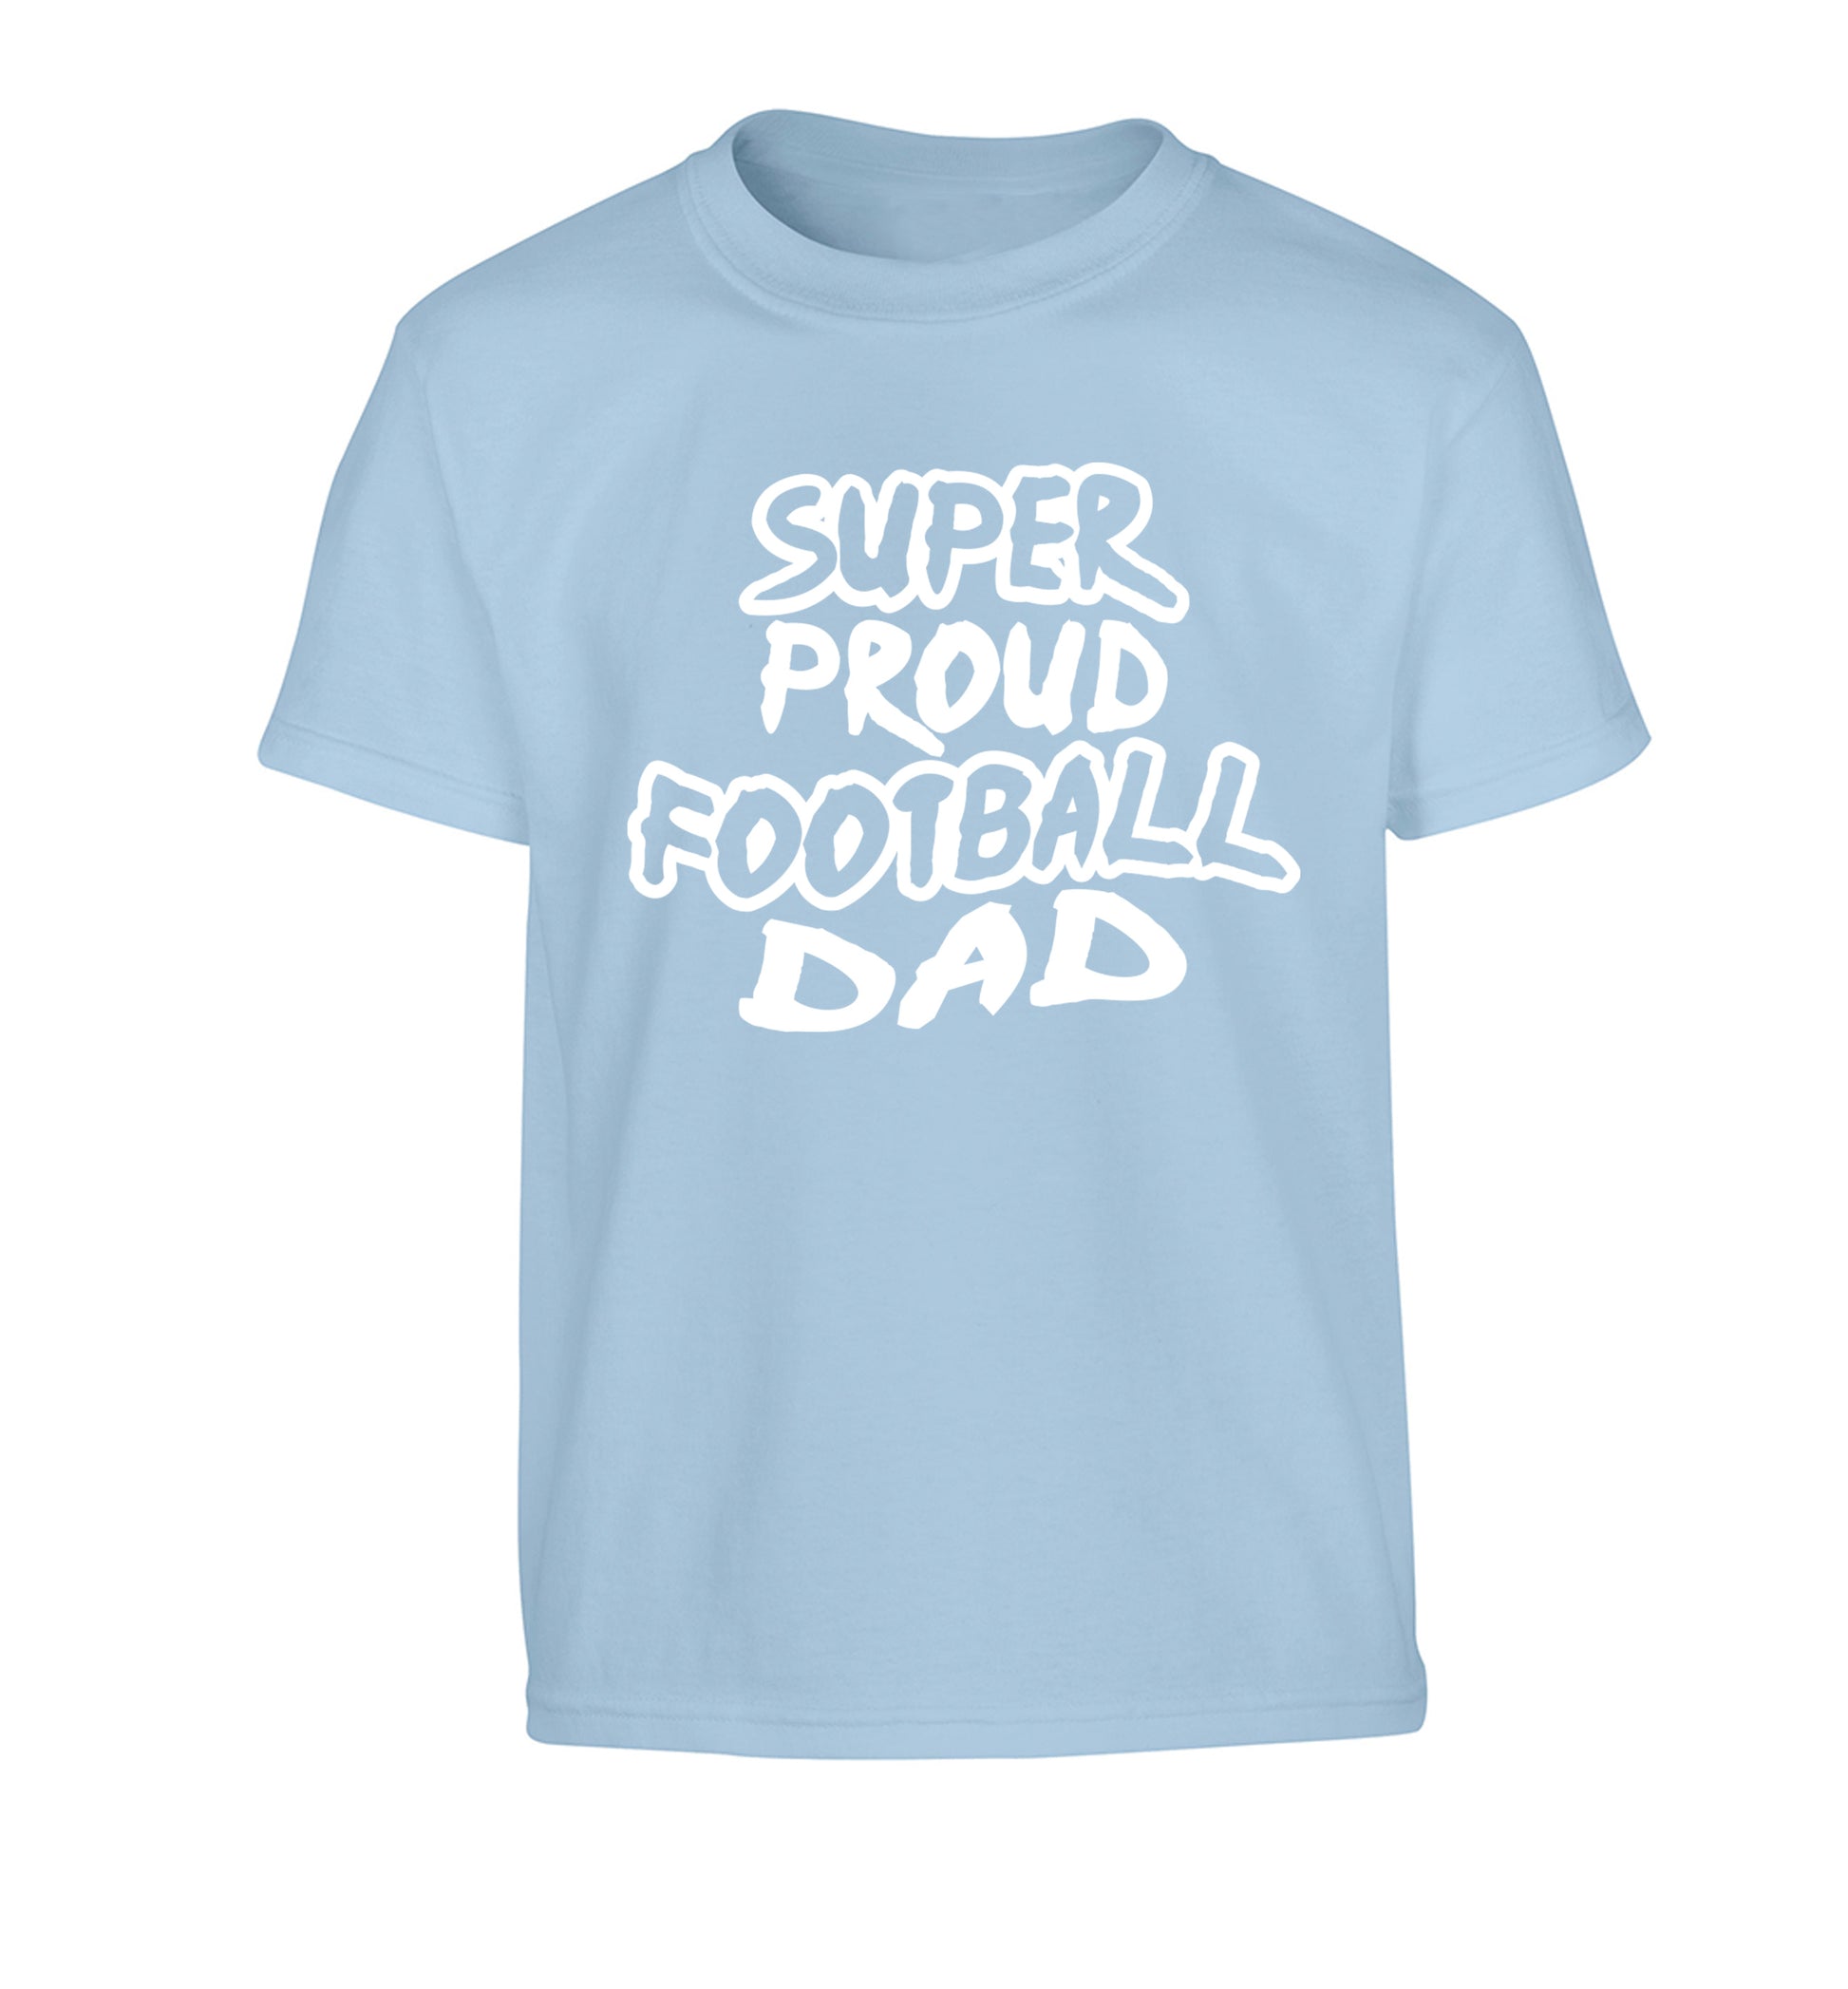 Super proud football dad Children's light blue Tshirt 12-14 Years